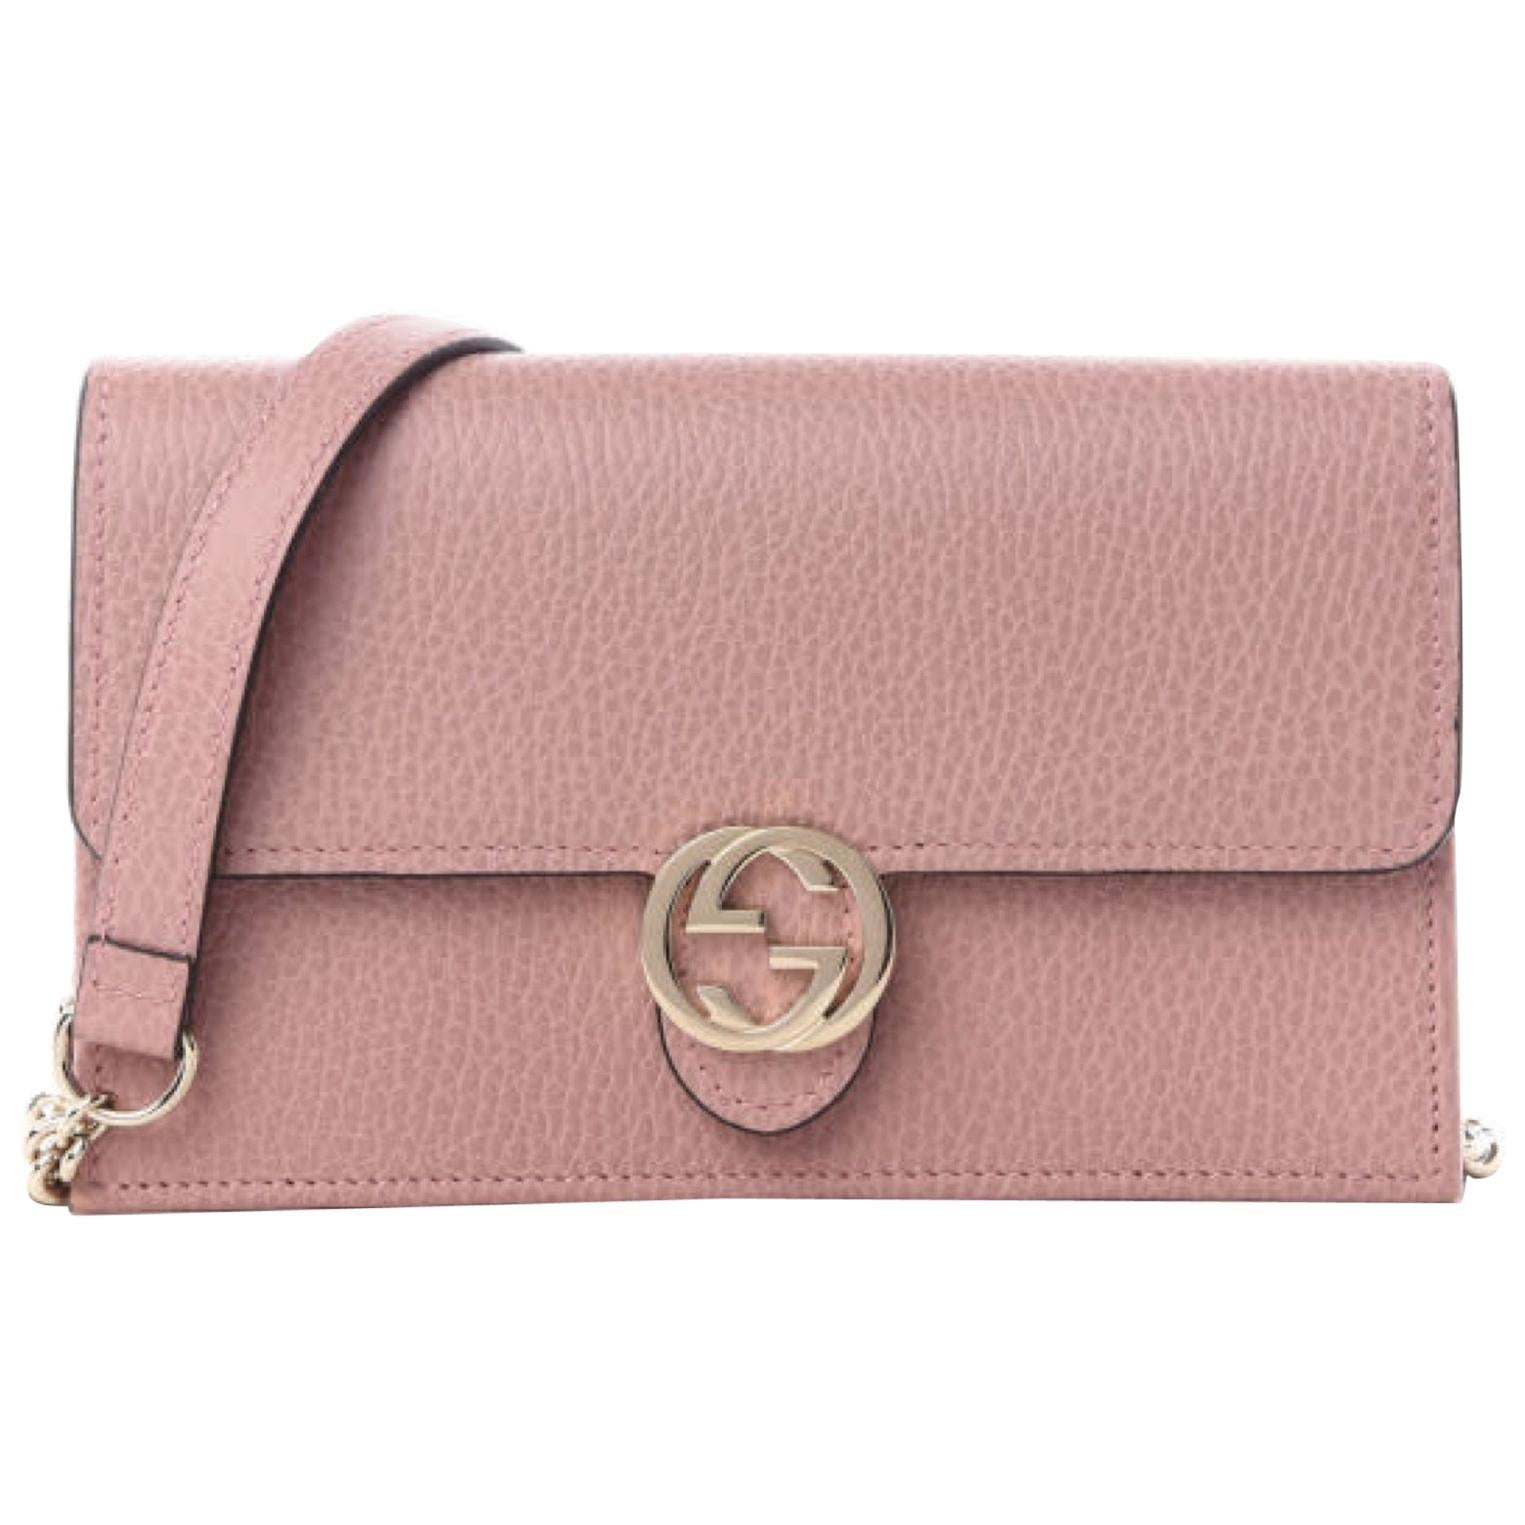 Gucci Dollar Calfskin Interlocking GG Wallet on Chain Bag - Soft Pink